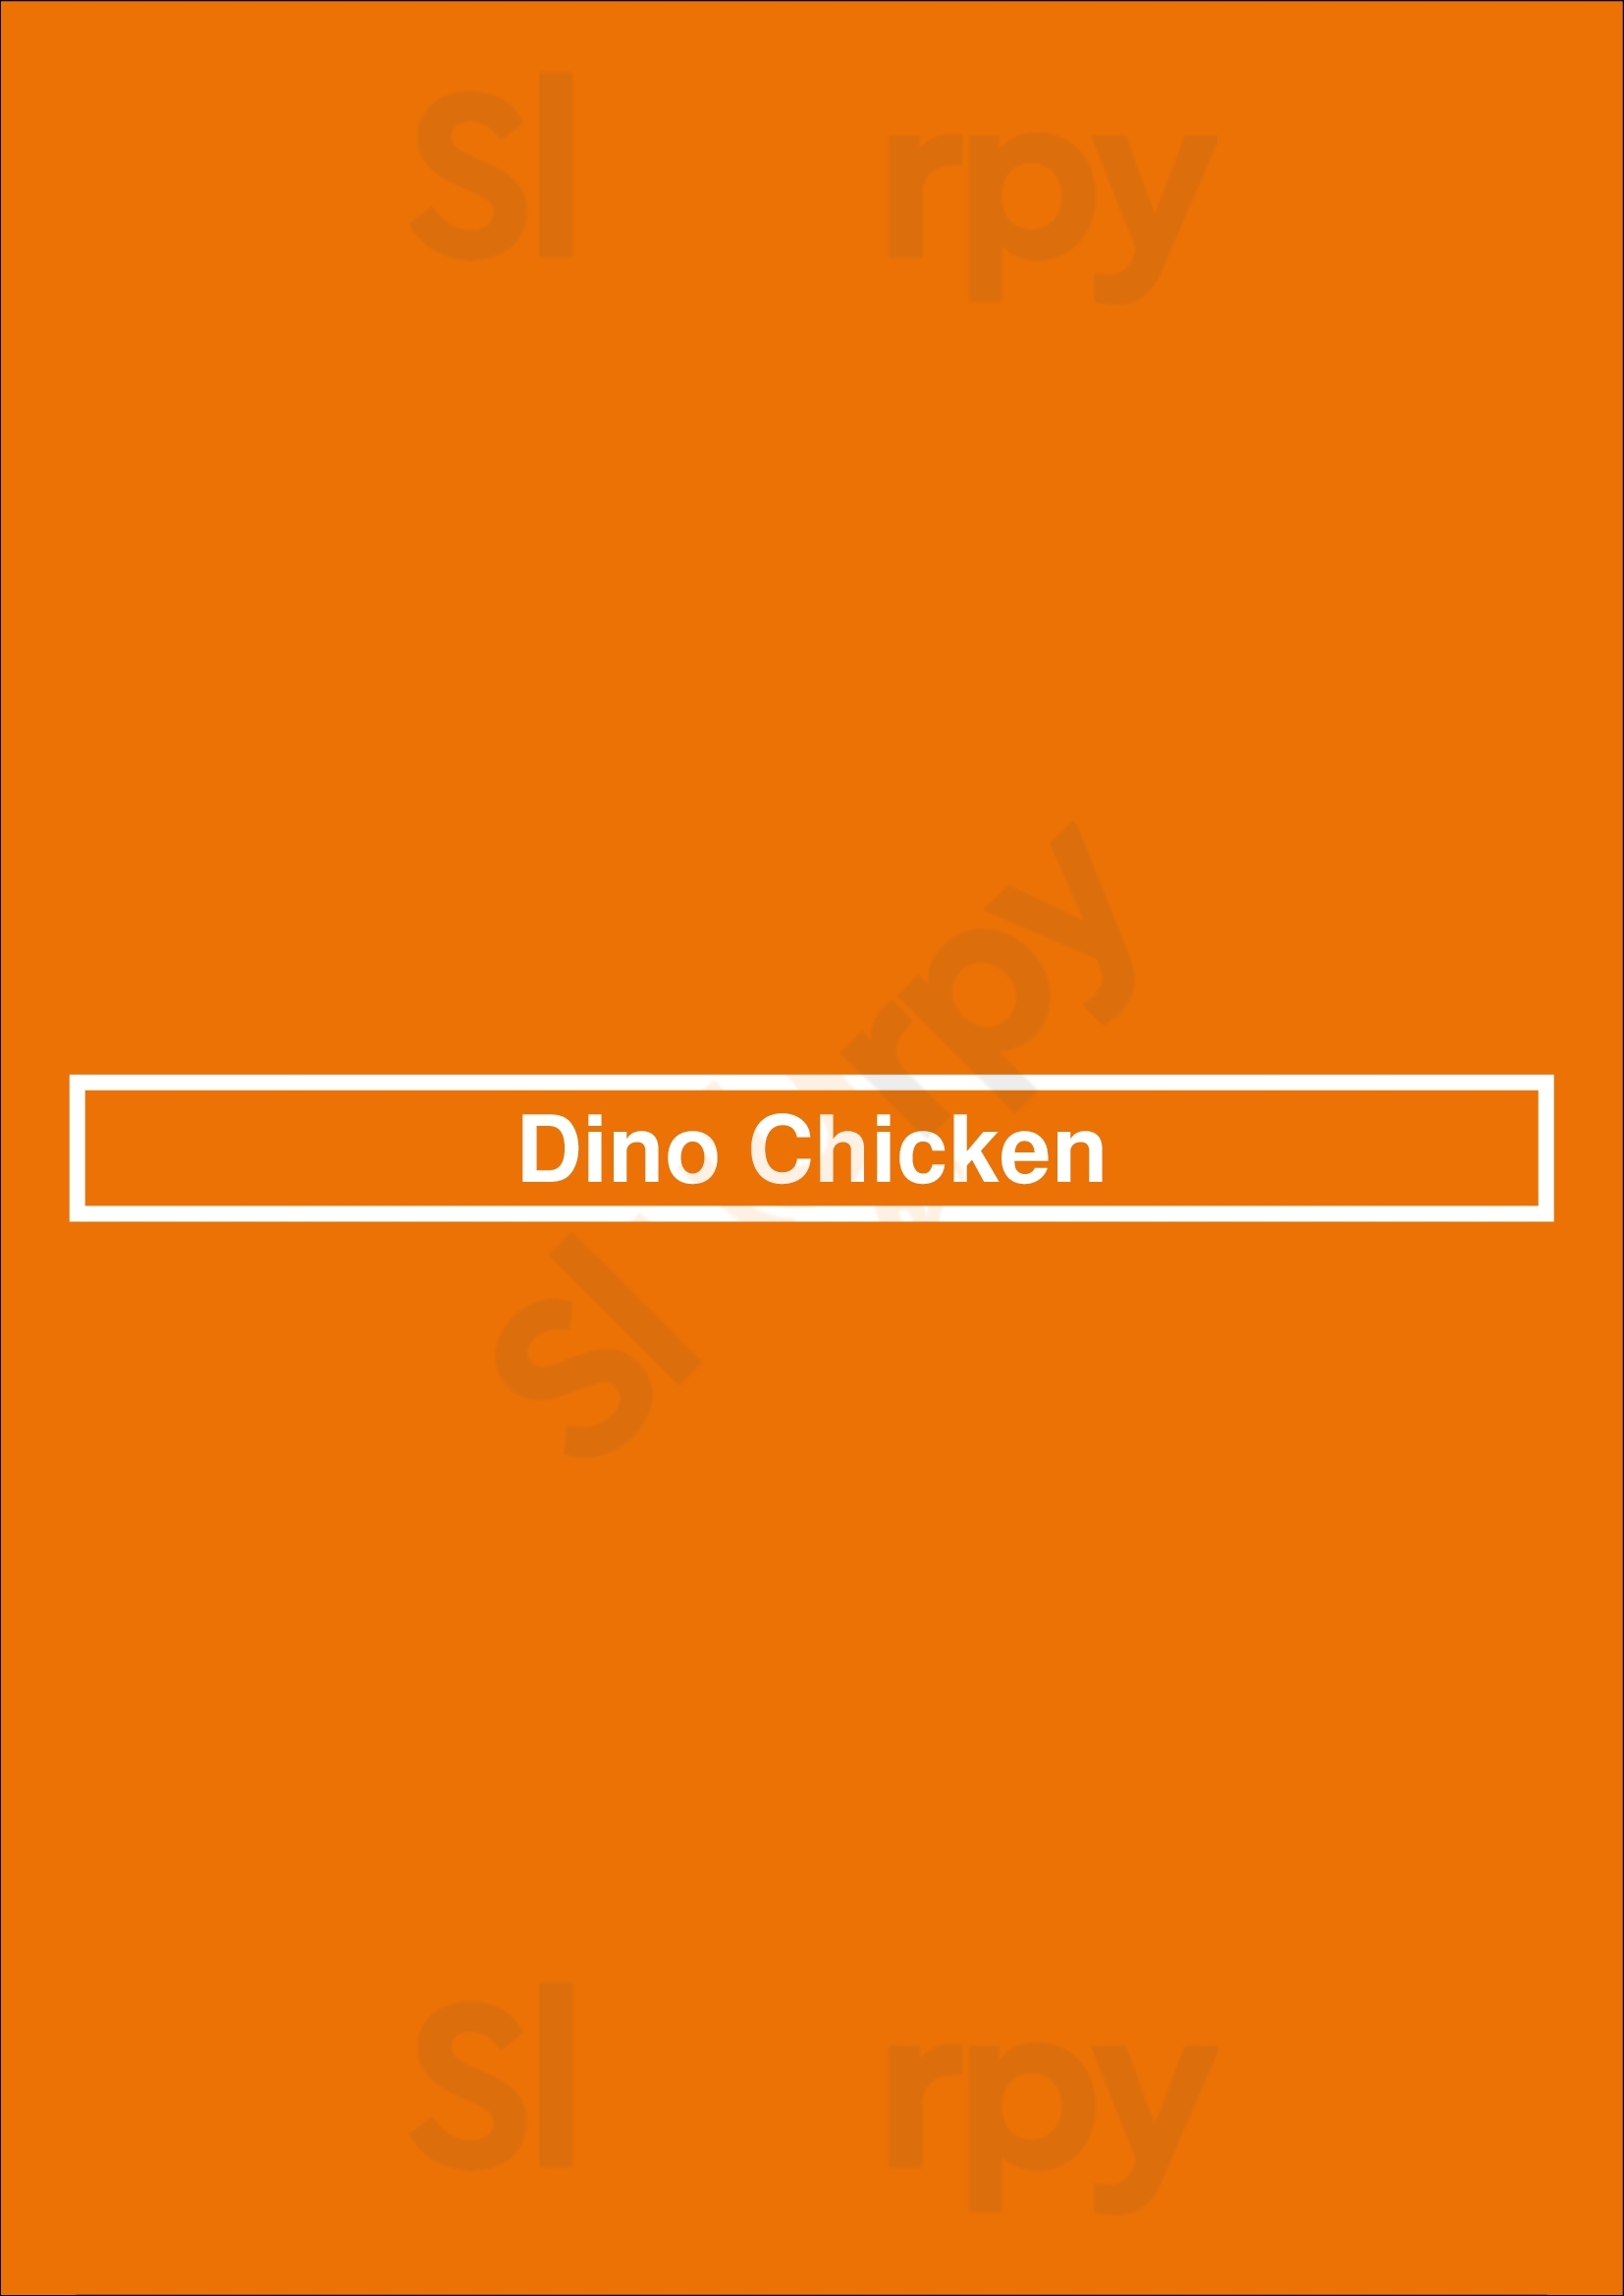 Dino Chicken Stanford-Le-Hope Menu - 1